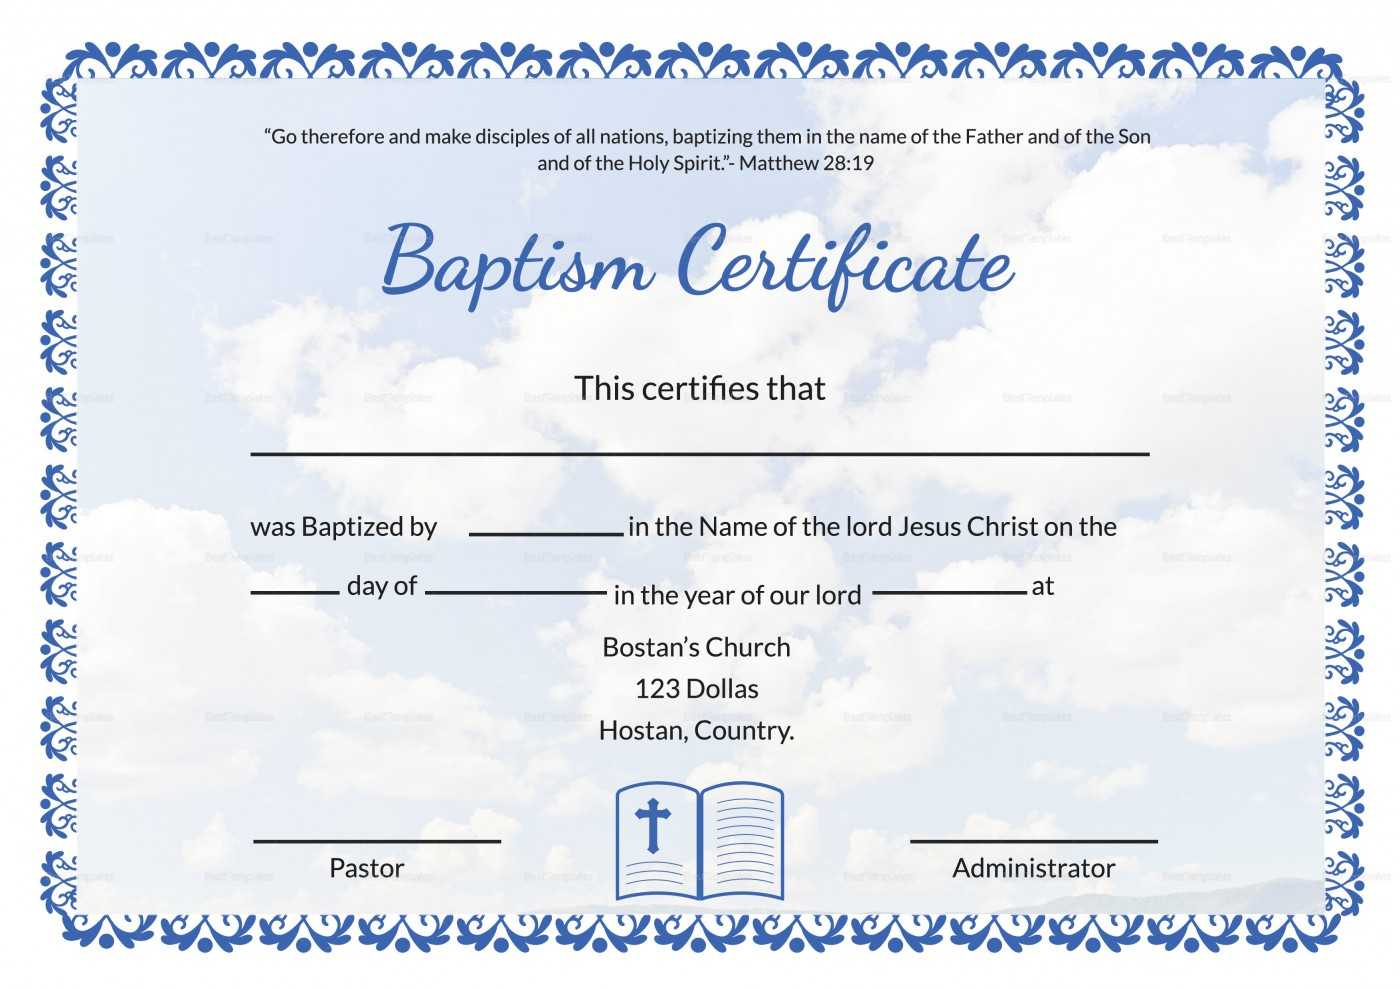 004 Certificate Of Baptism Template Ideas Unique Word Throughout Baptism Certificate Template Word